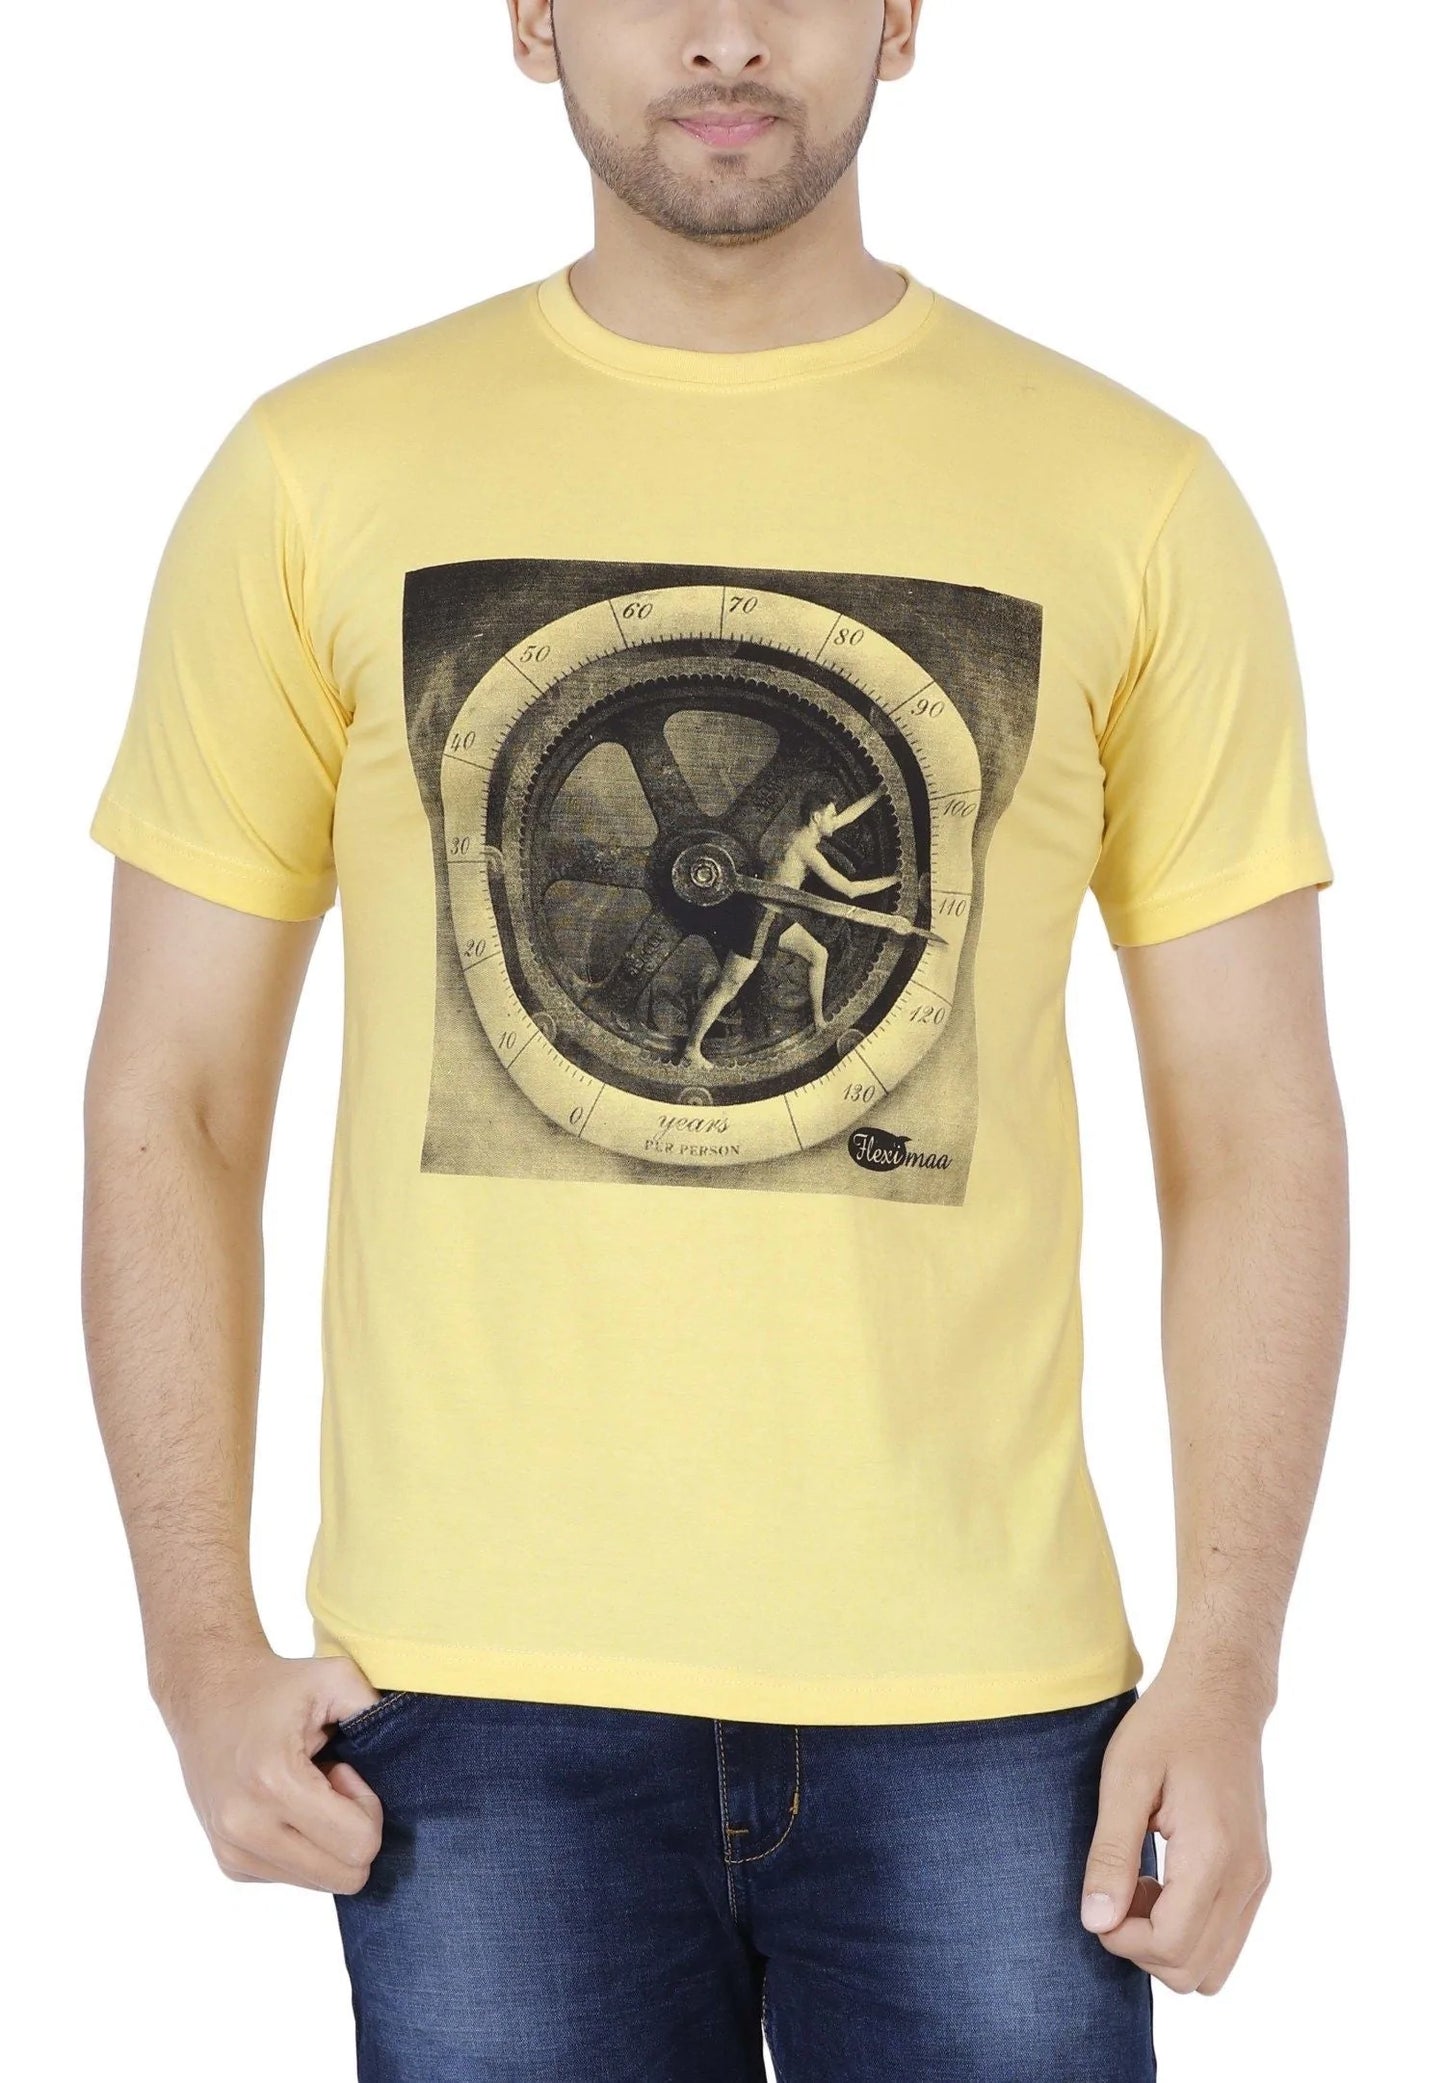 Men's Cotton Printed Round Neck Half Sleeve T-Shirt